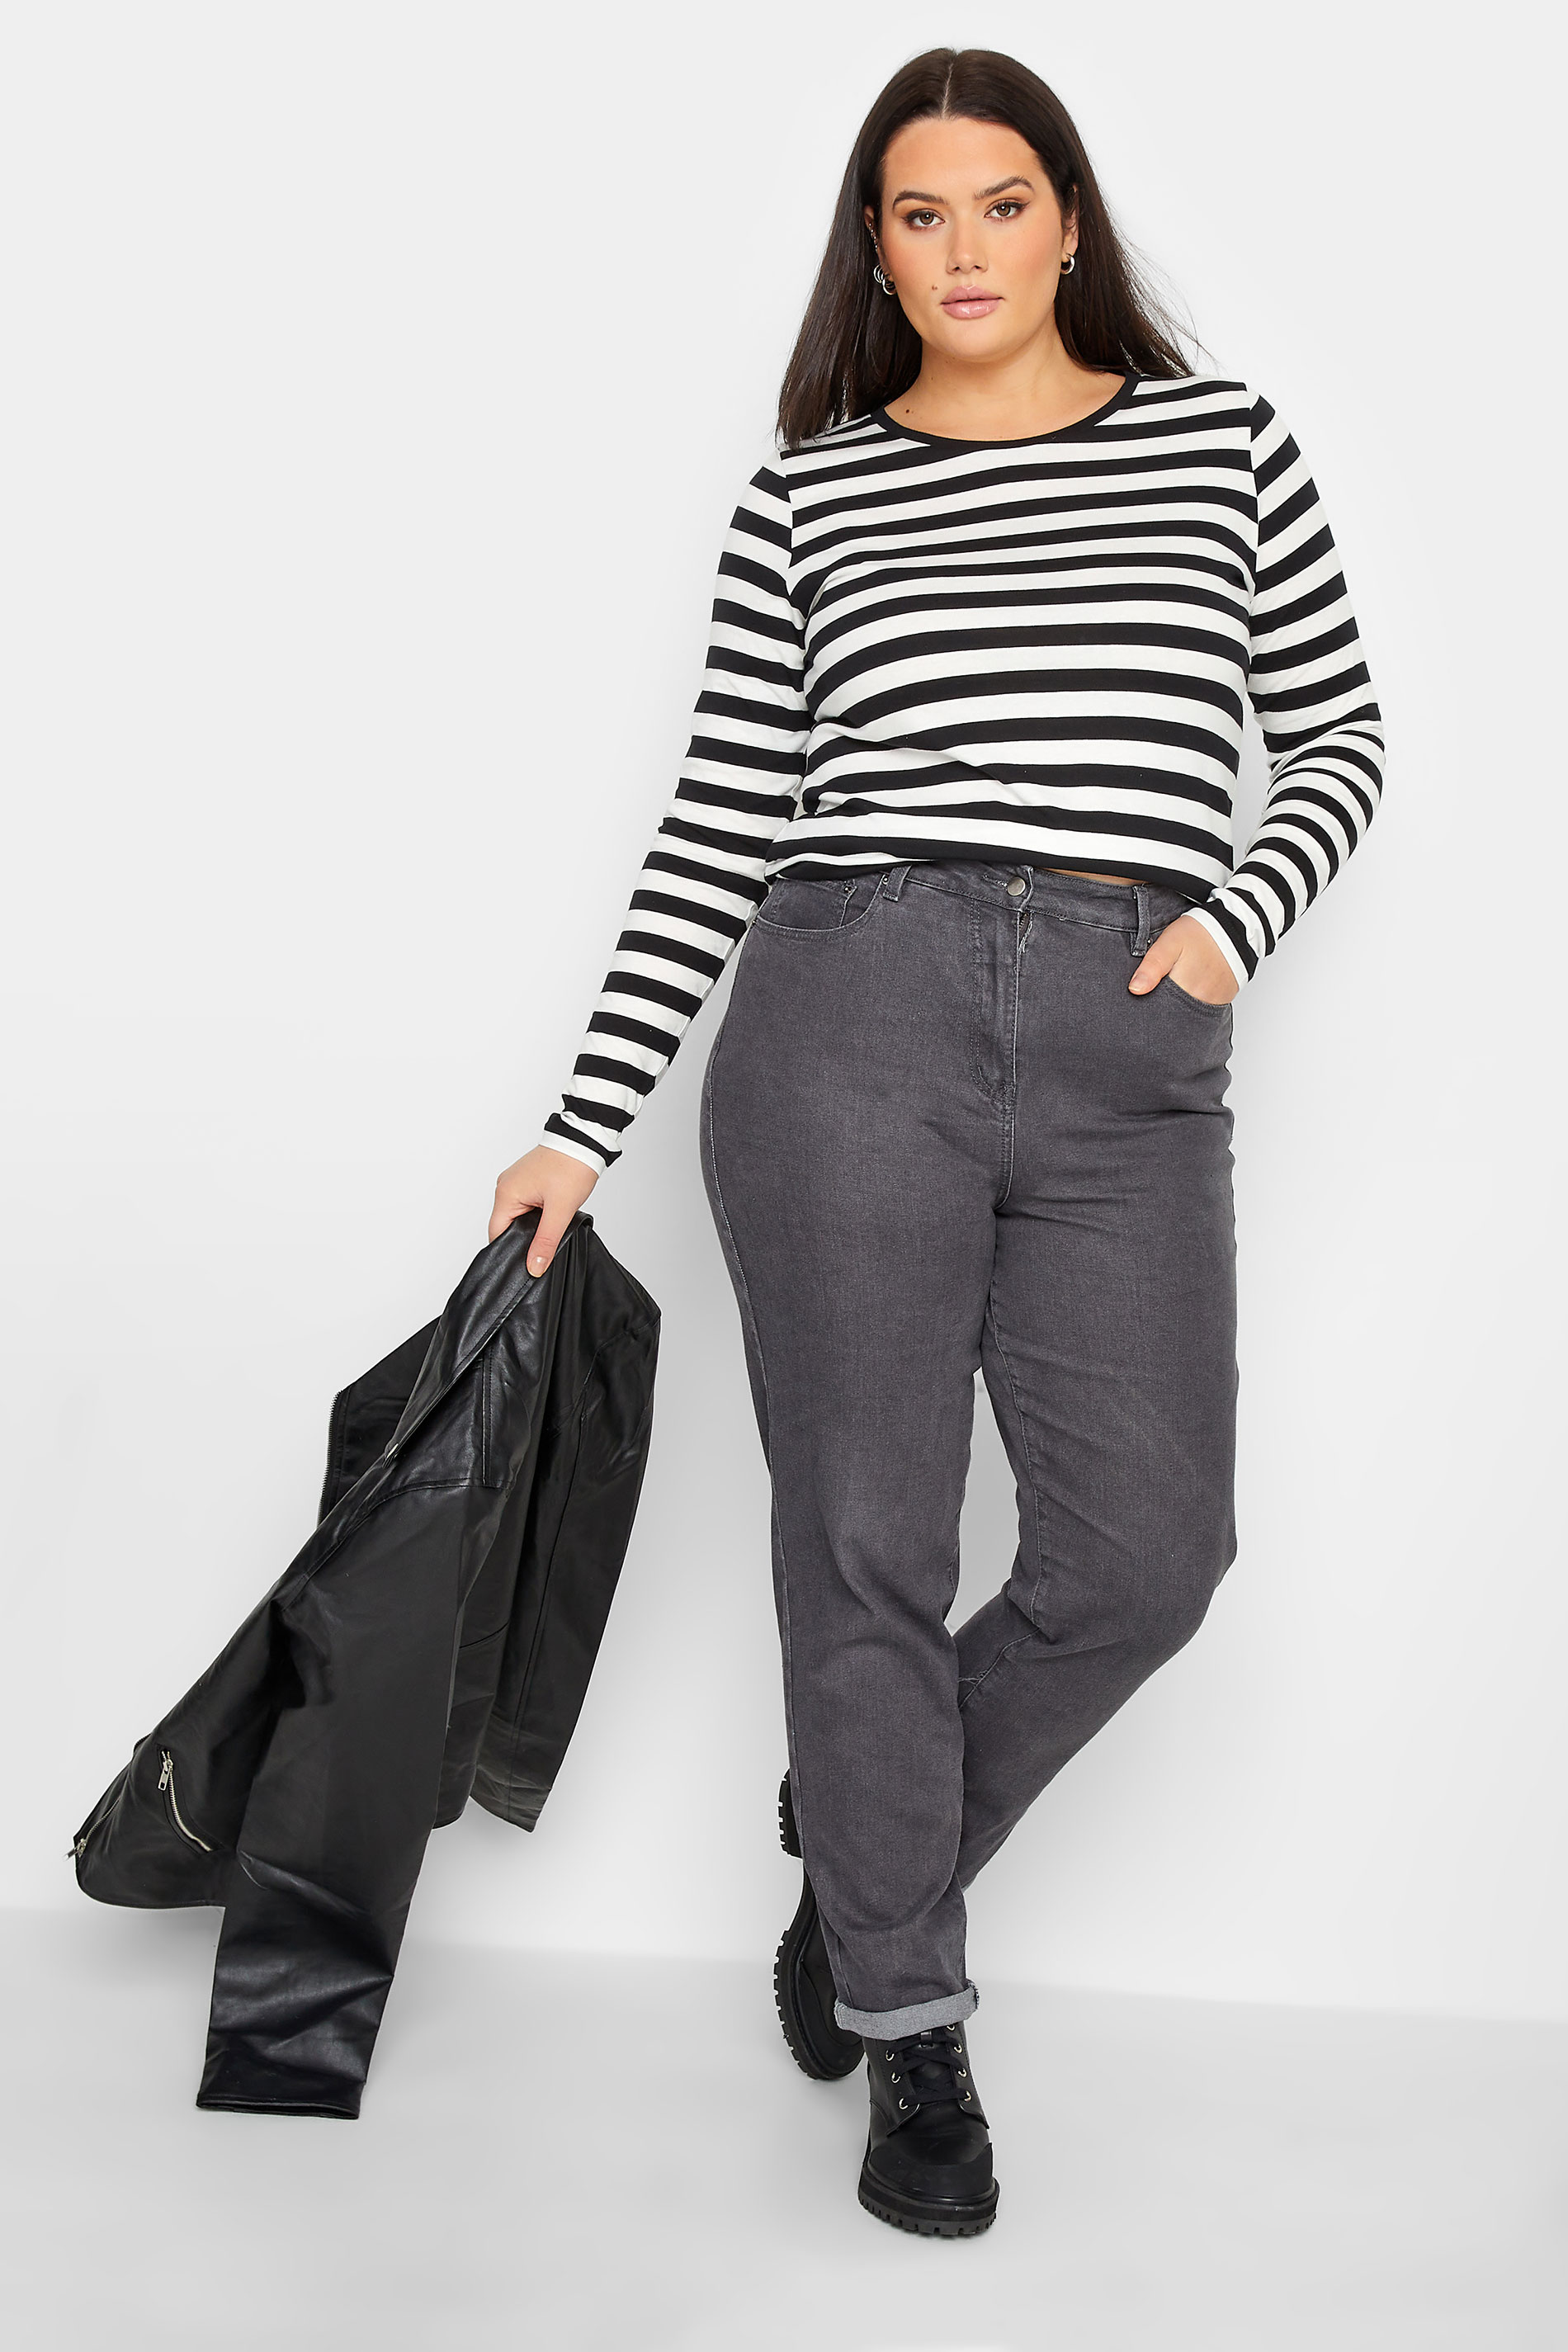 LTS Tall Women's Black Stripe Long Sleeve T-Shirt | Long Tall Sally 2